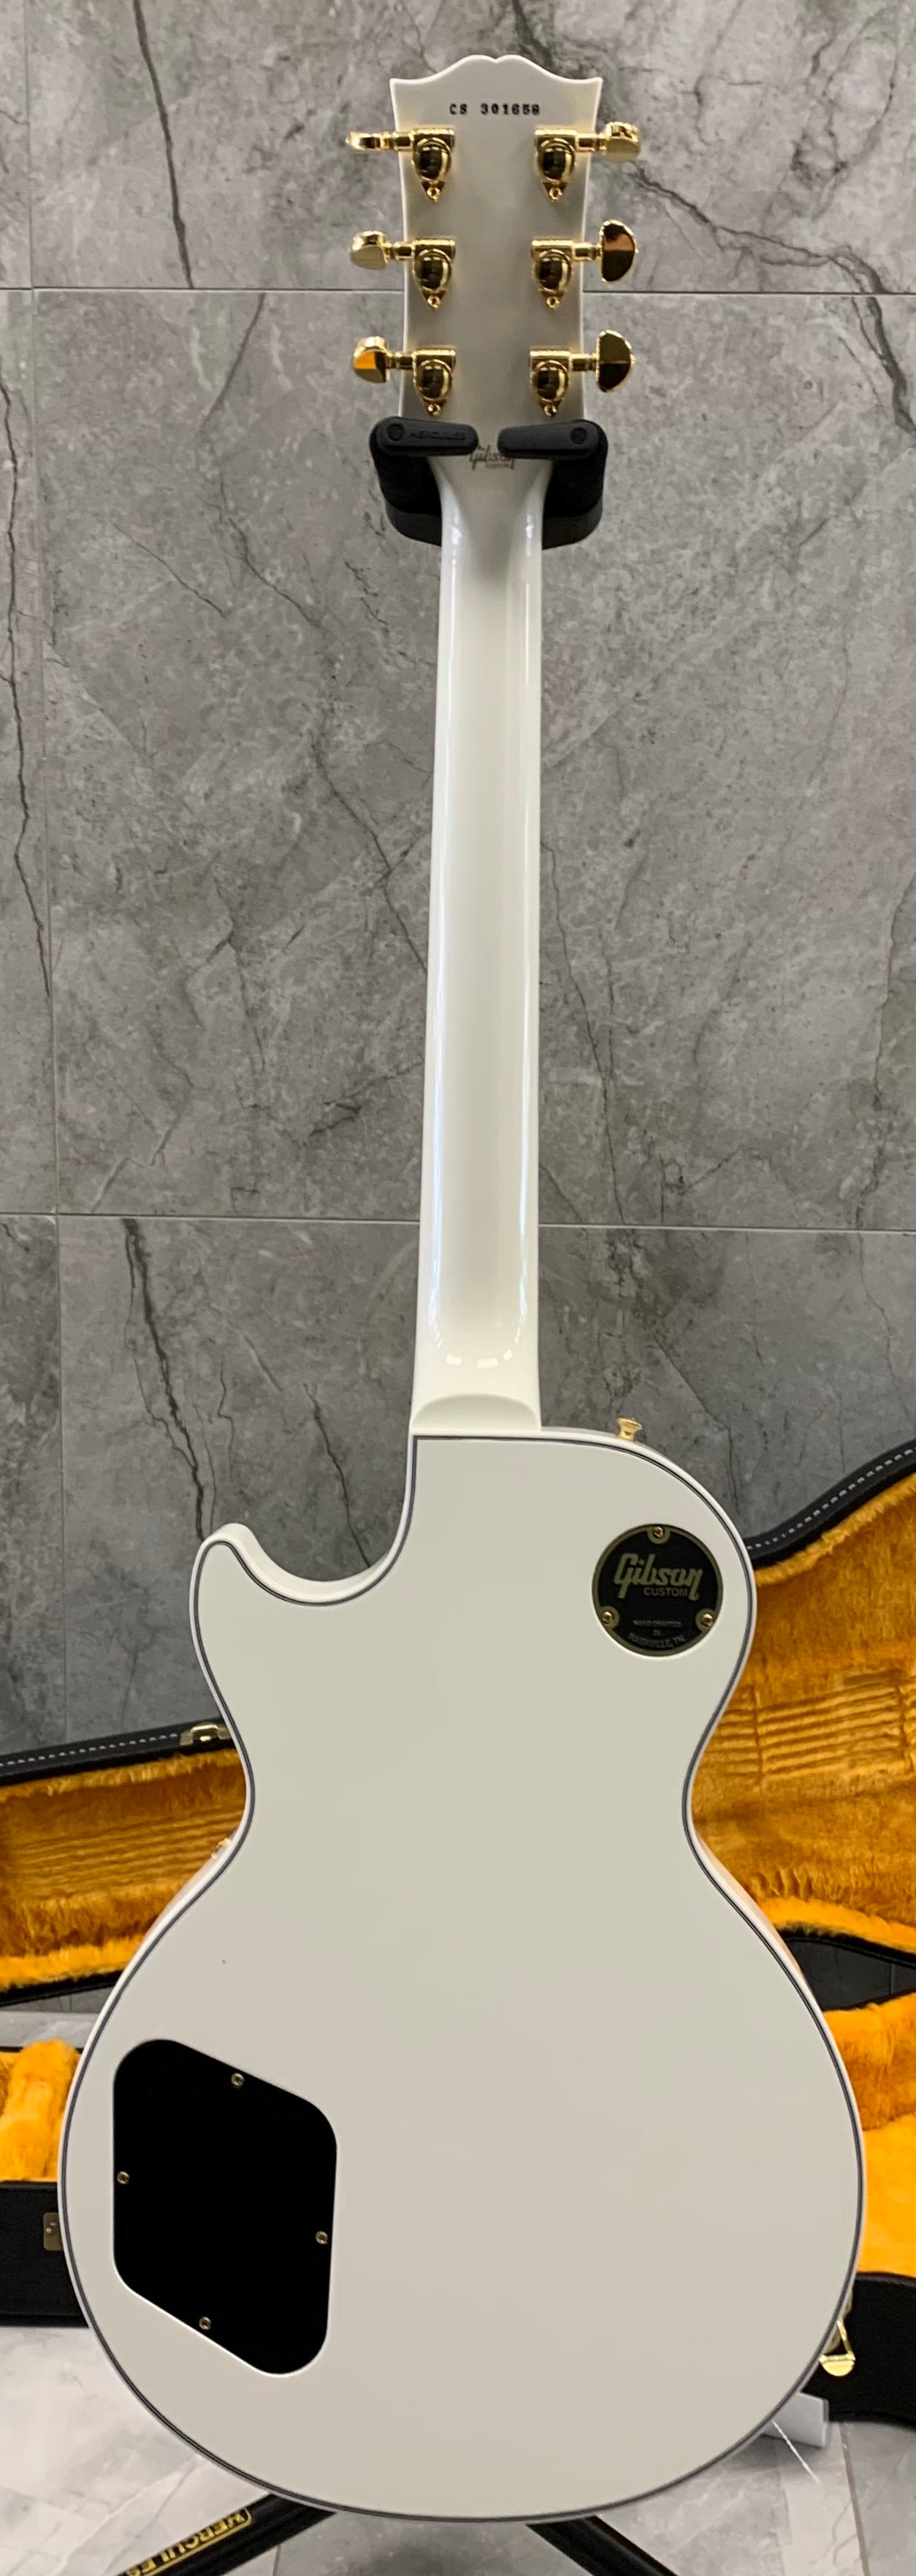 Gibson Custom Shop Les Paul Custom w/ Ebony Fingerboard Gloss Alpine White LPCE-AWGH SERIAL NUMBER CS301658 - 9.8 LBS